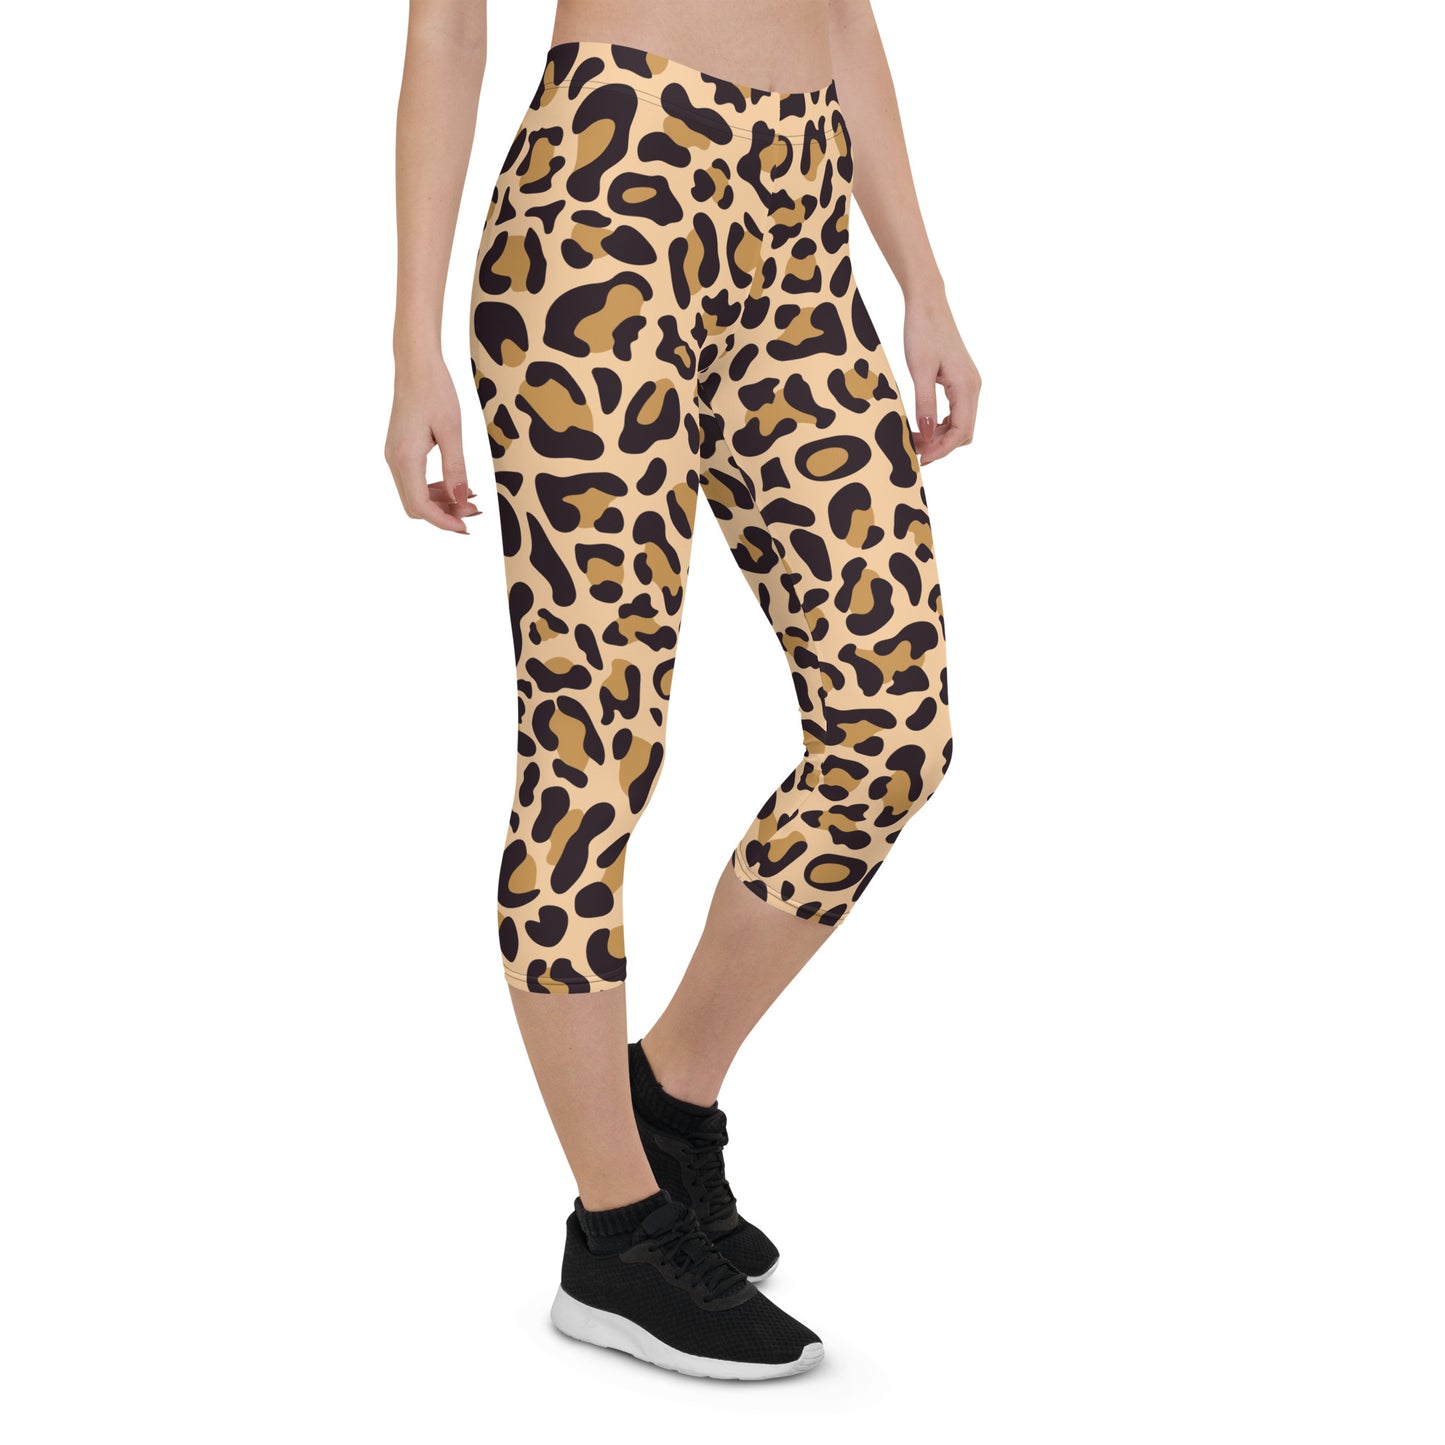 "Leopard" capri leggings